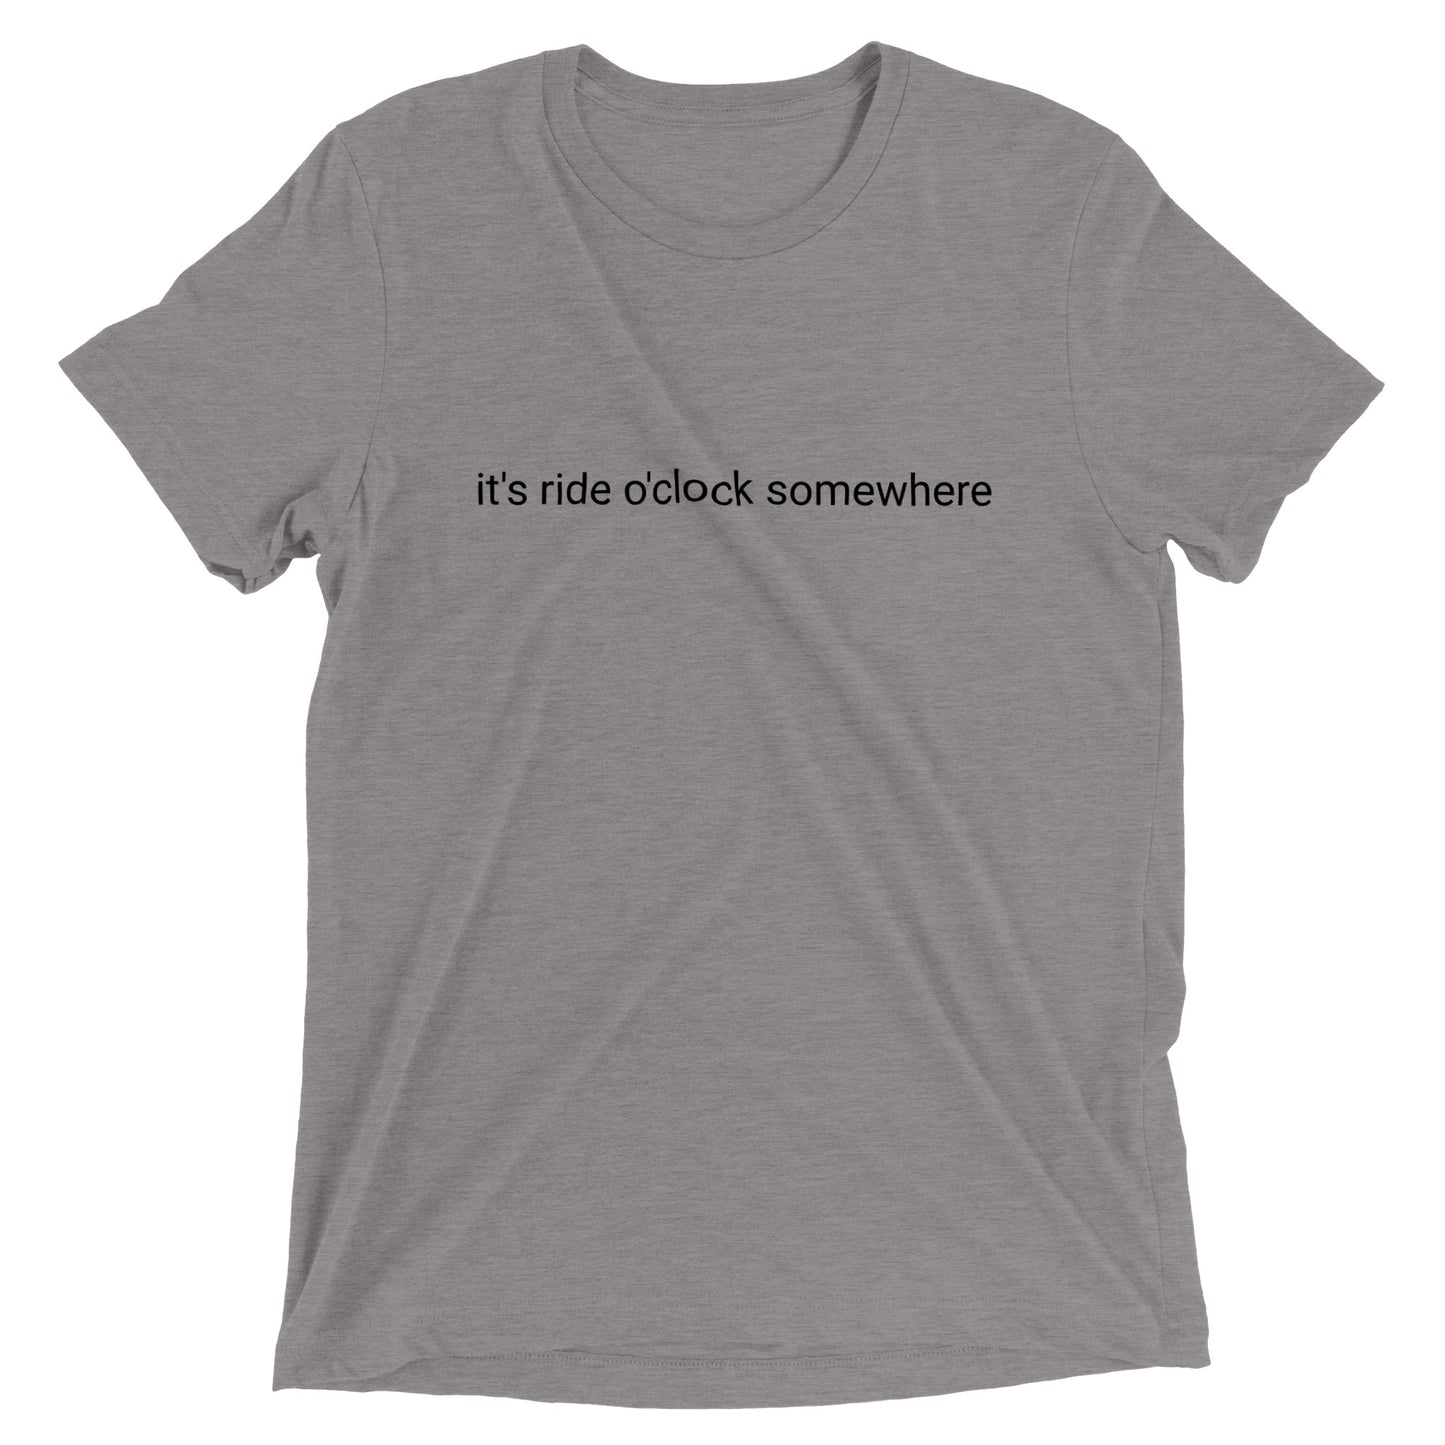 It's ride o'clock somewhere - Triblend Unisex Crewneck T-shirt